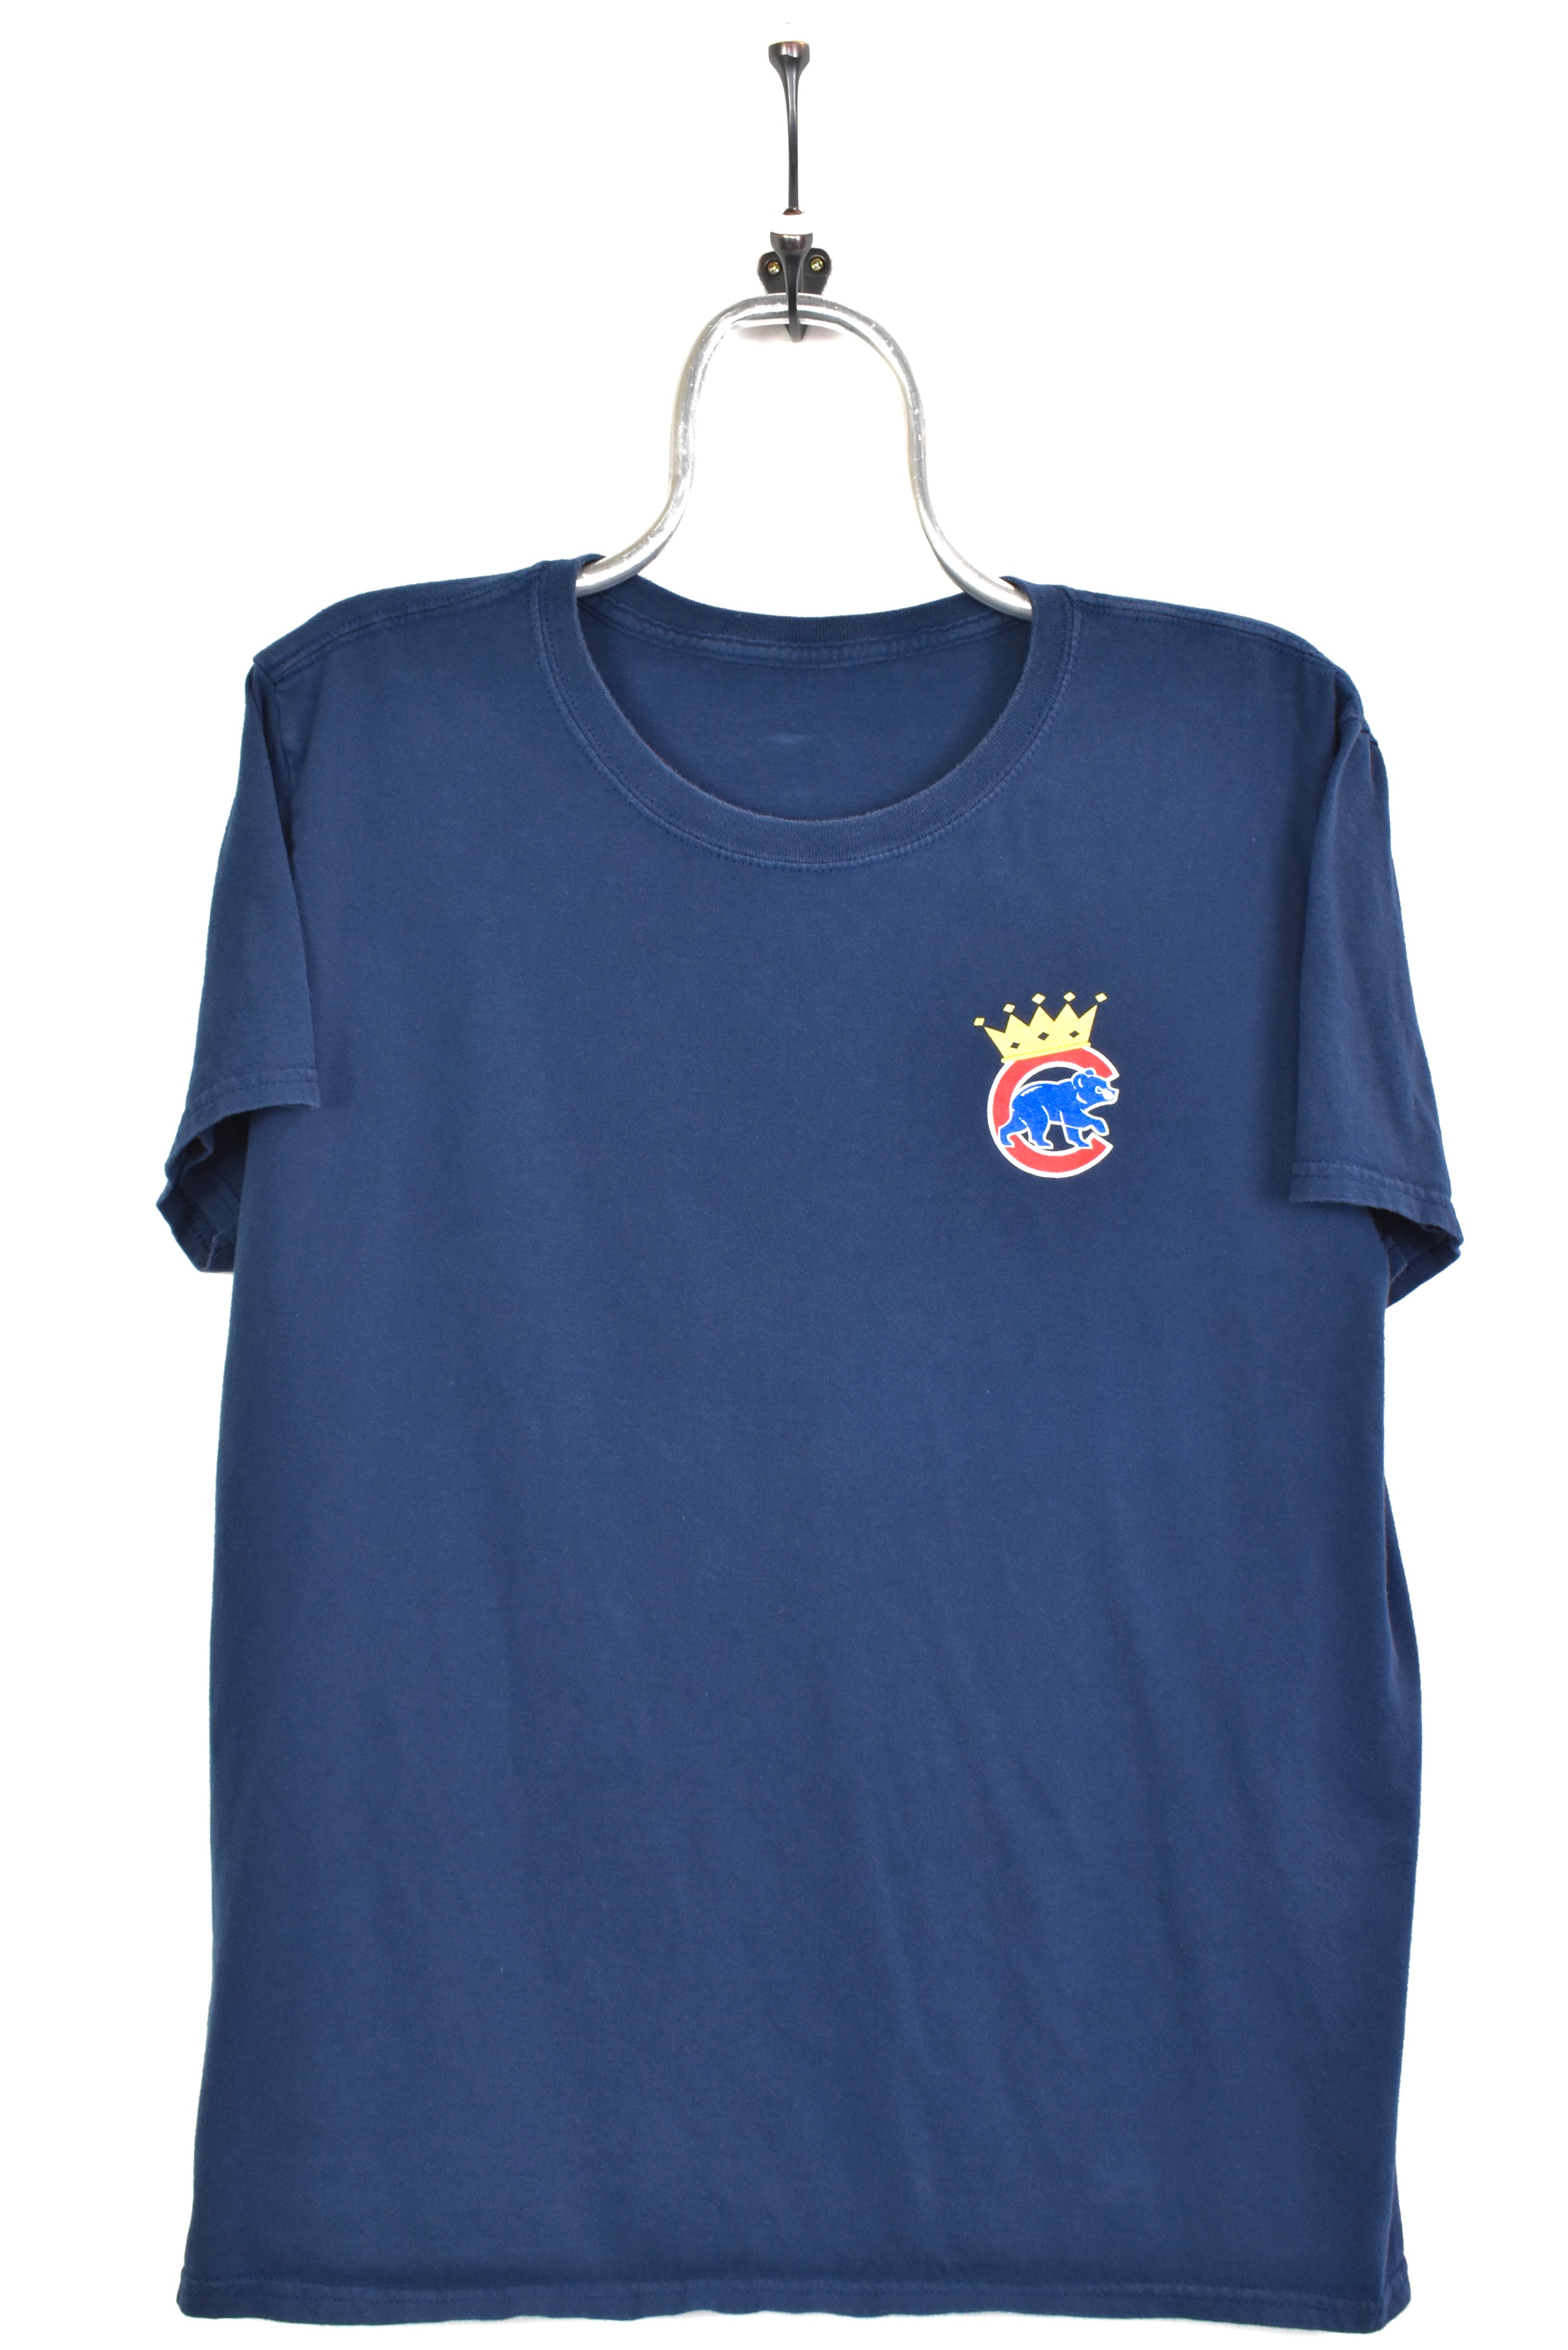 Vintage MLB Chicago Cubs navy t-shirt | Large PRO SPORT